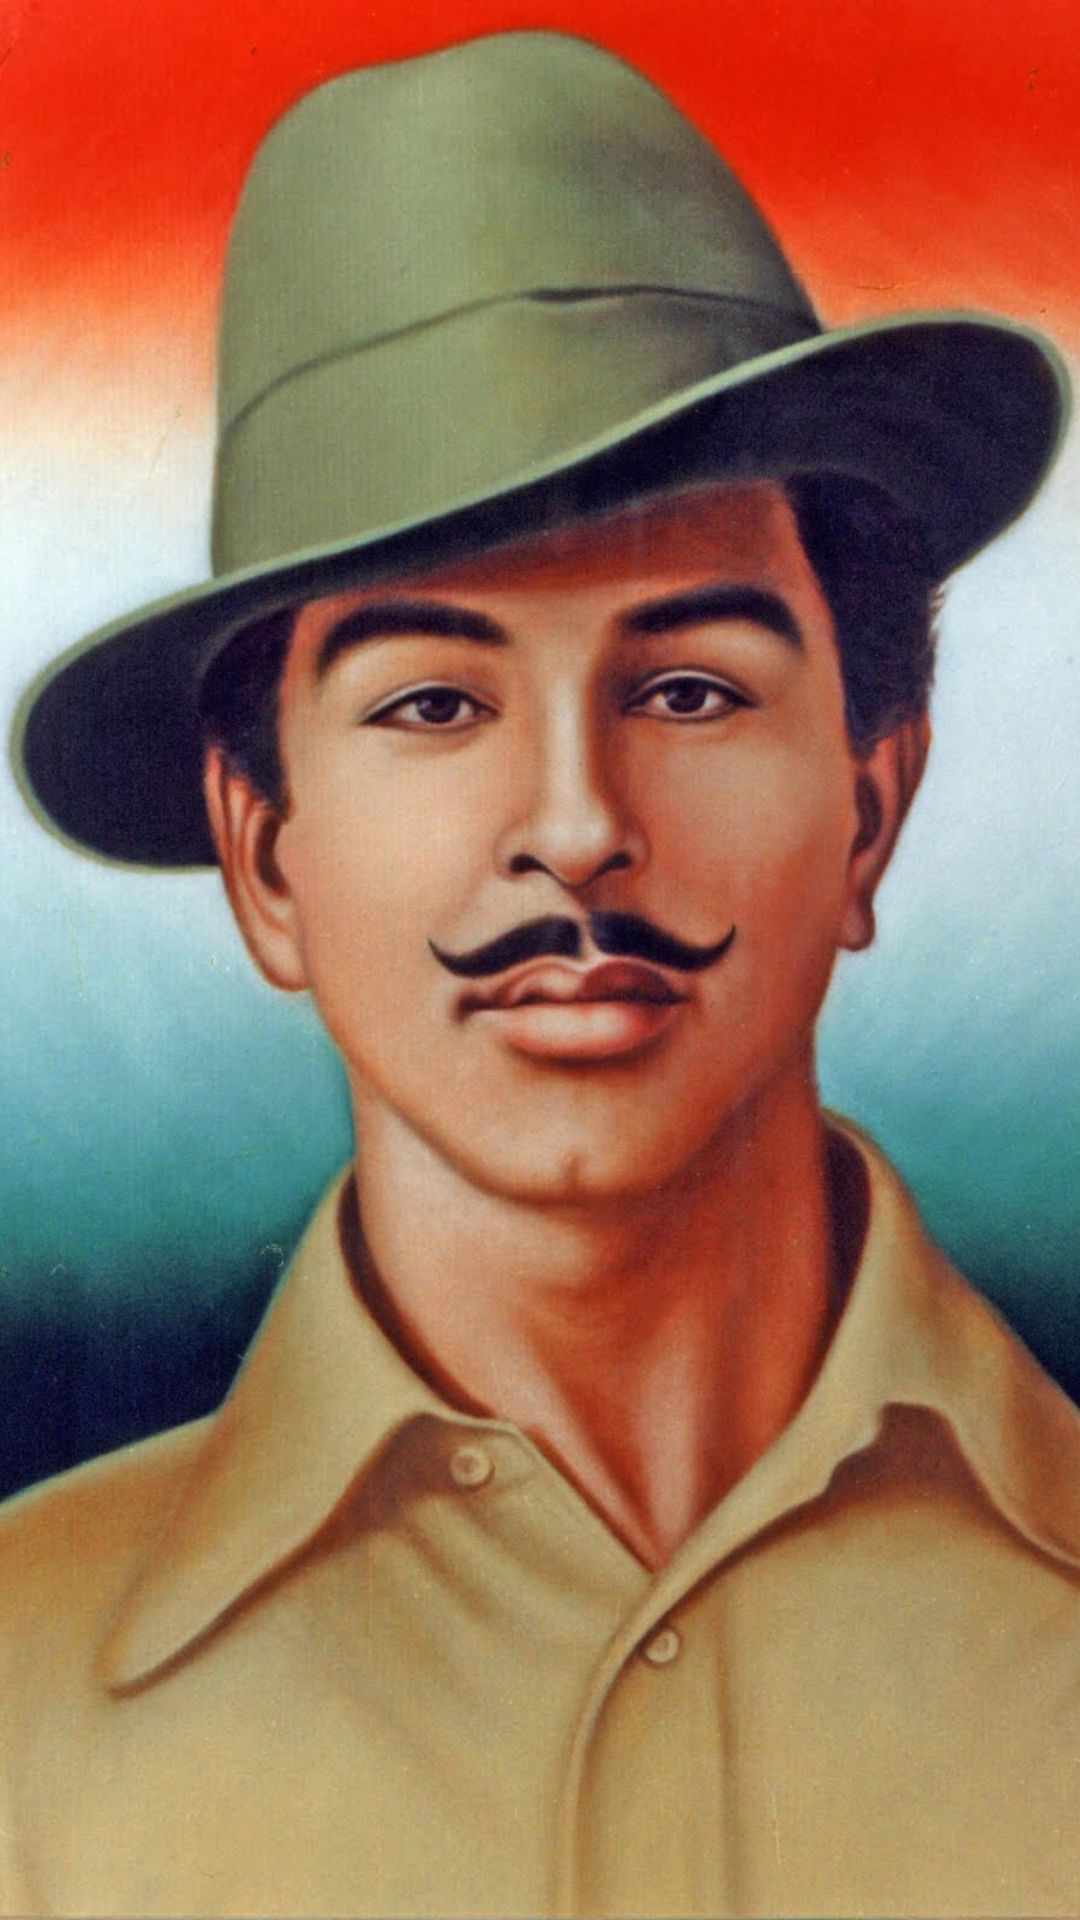 New Bhagat Singh Wallpaper